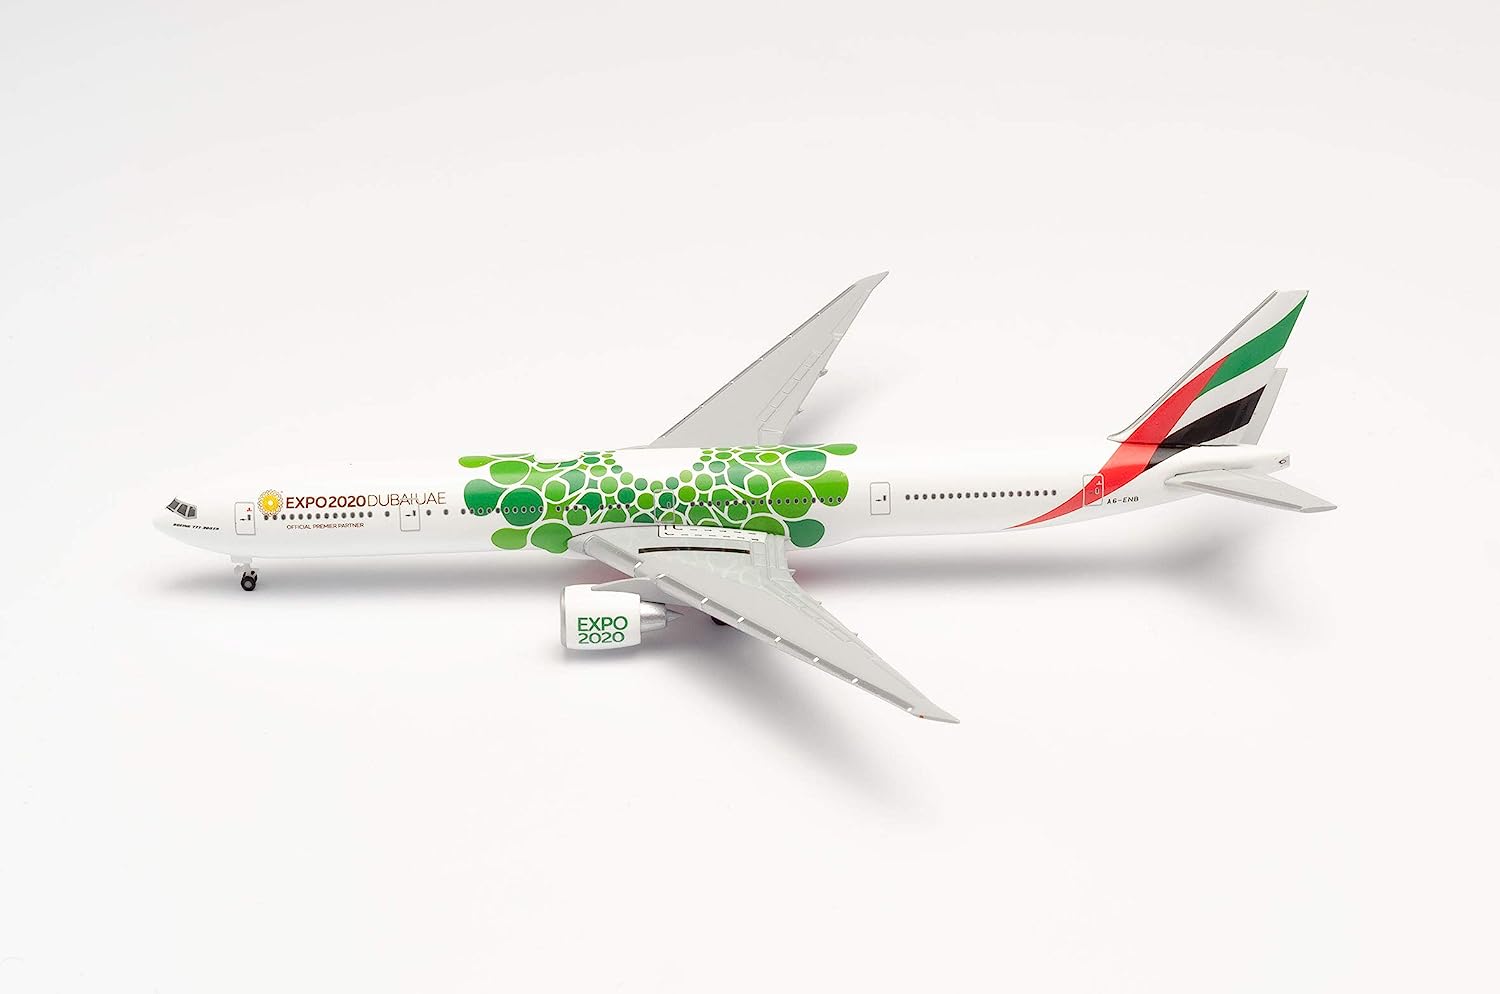   Emirates Boeing 777-300ER Expo 2020 Dubai, 1:500, 533720. # 4 hobbyplus.ru